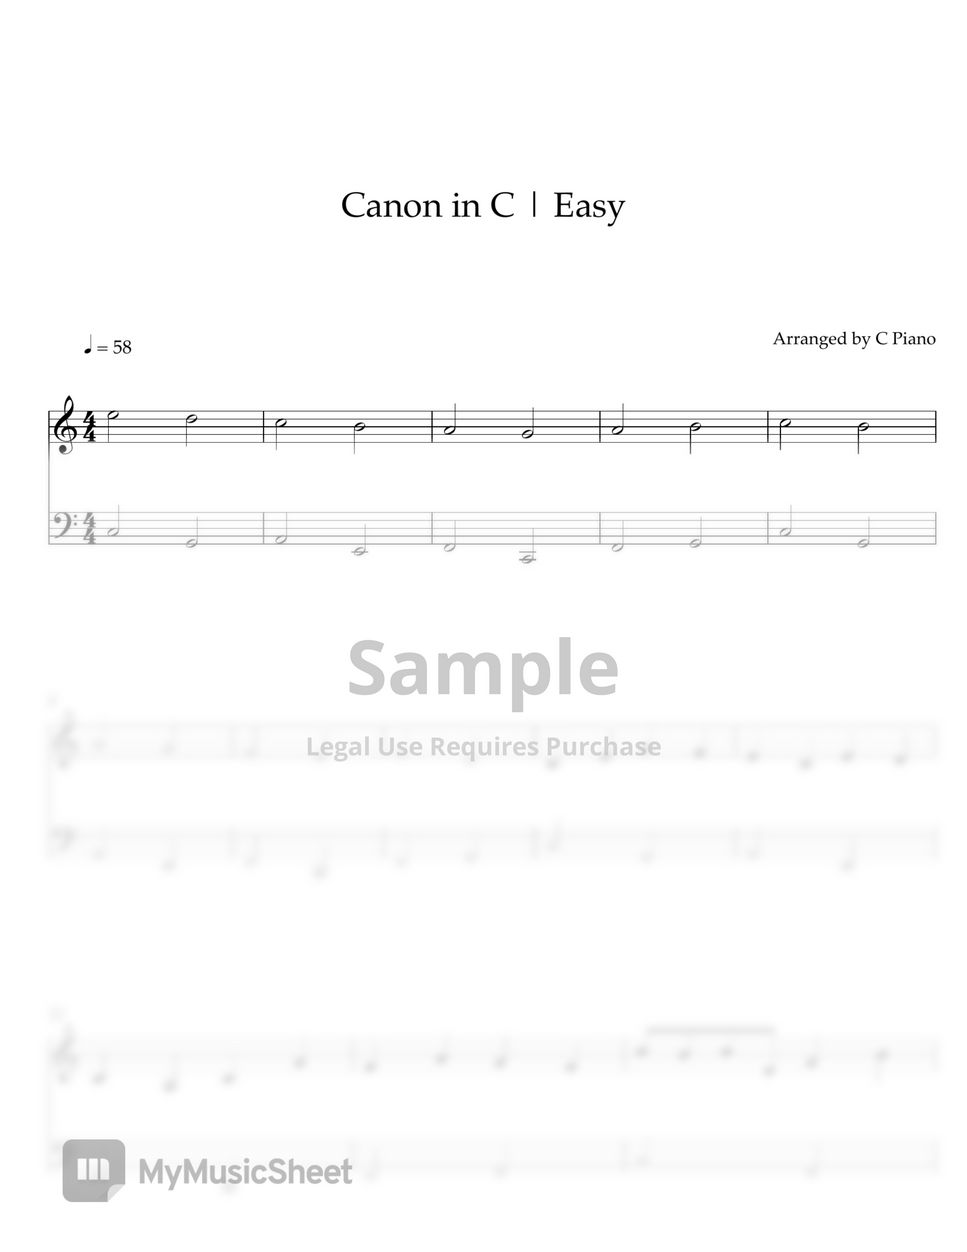 Pachelbel - Canon in C (Easy Version) by C Piano